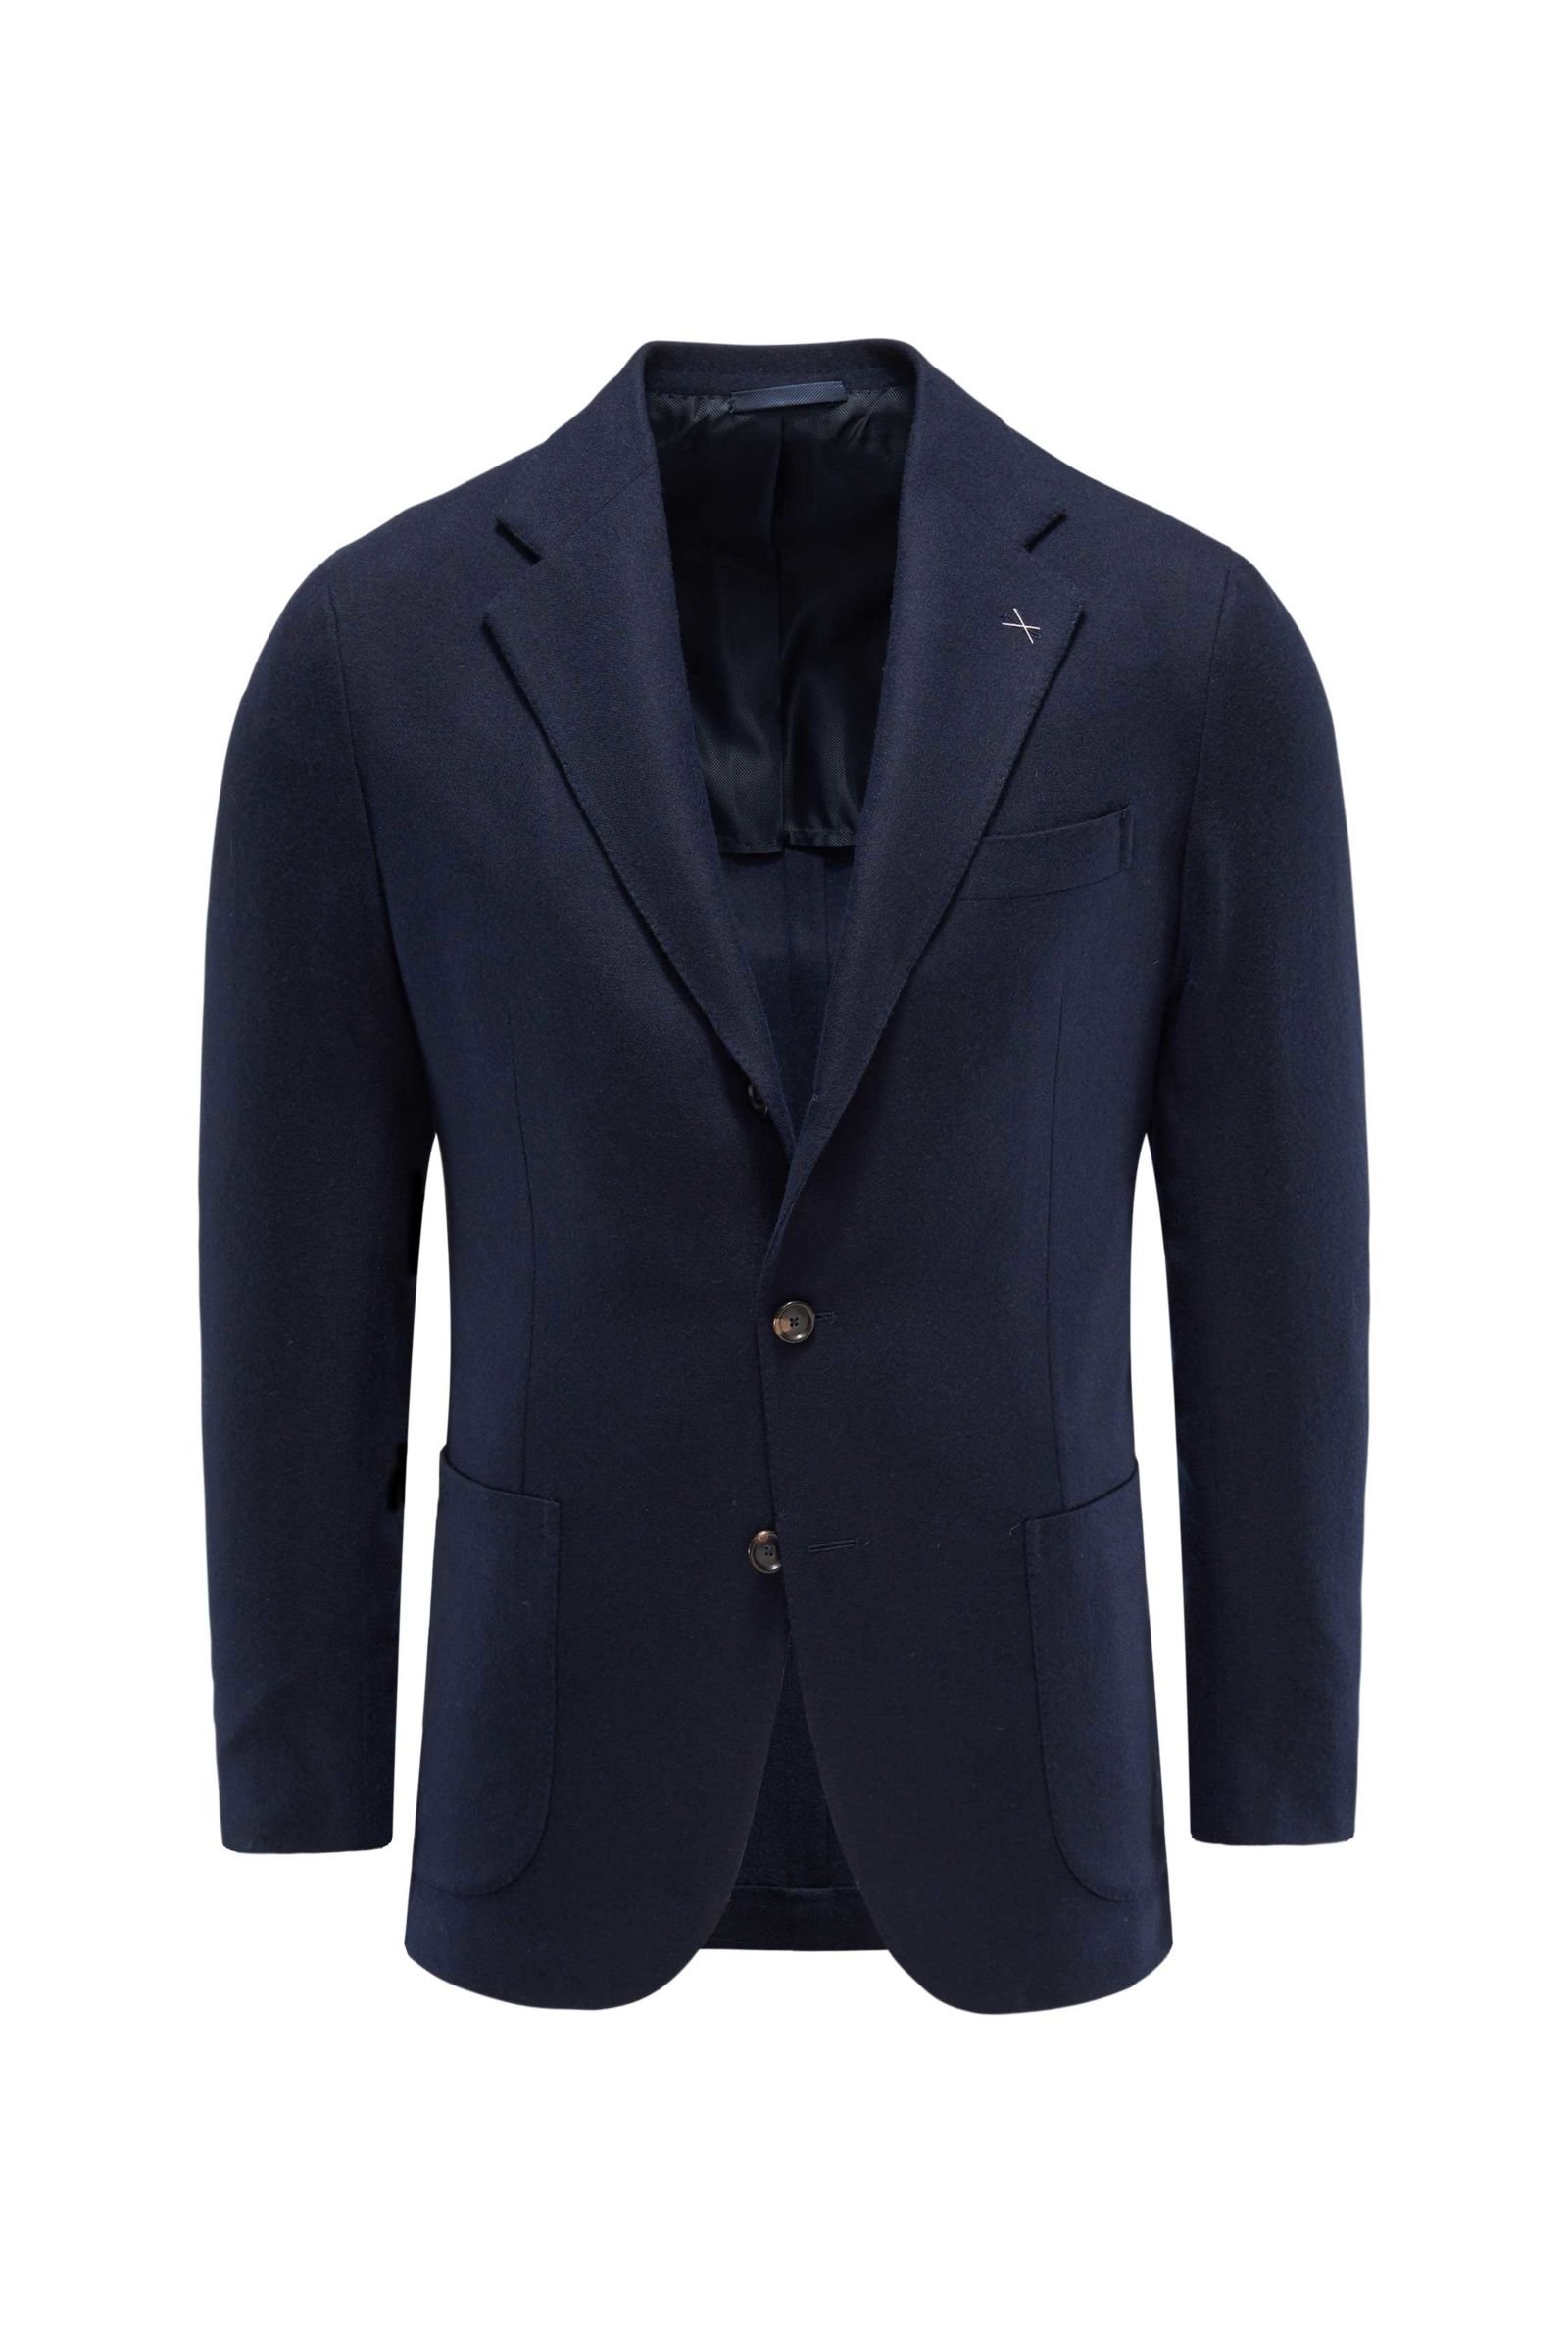 Cashmere smart-casual jacket 'Posillipo' navy